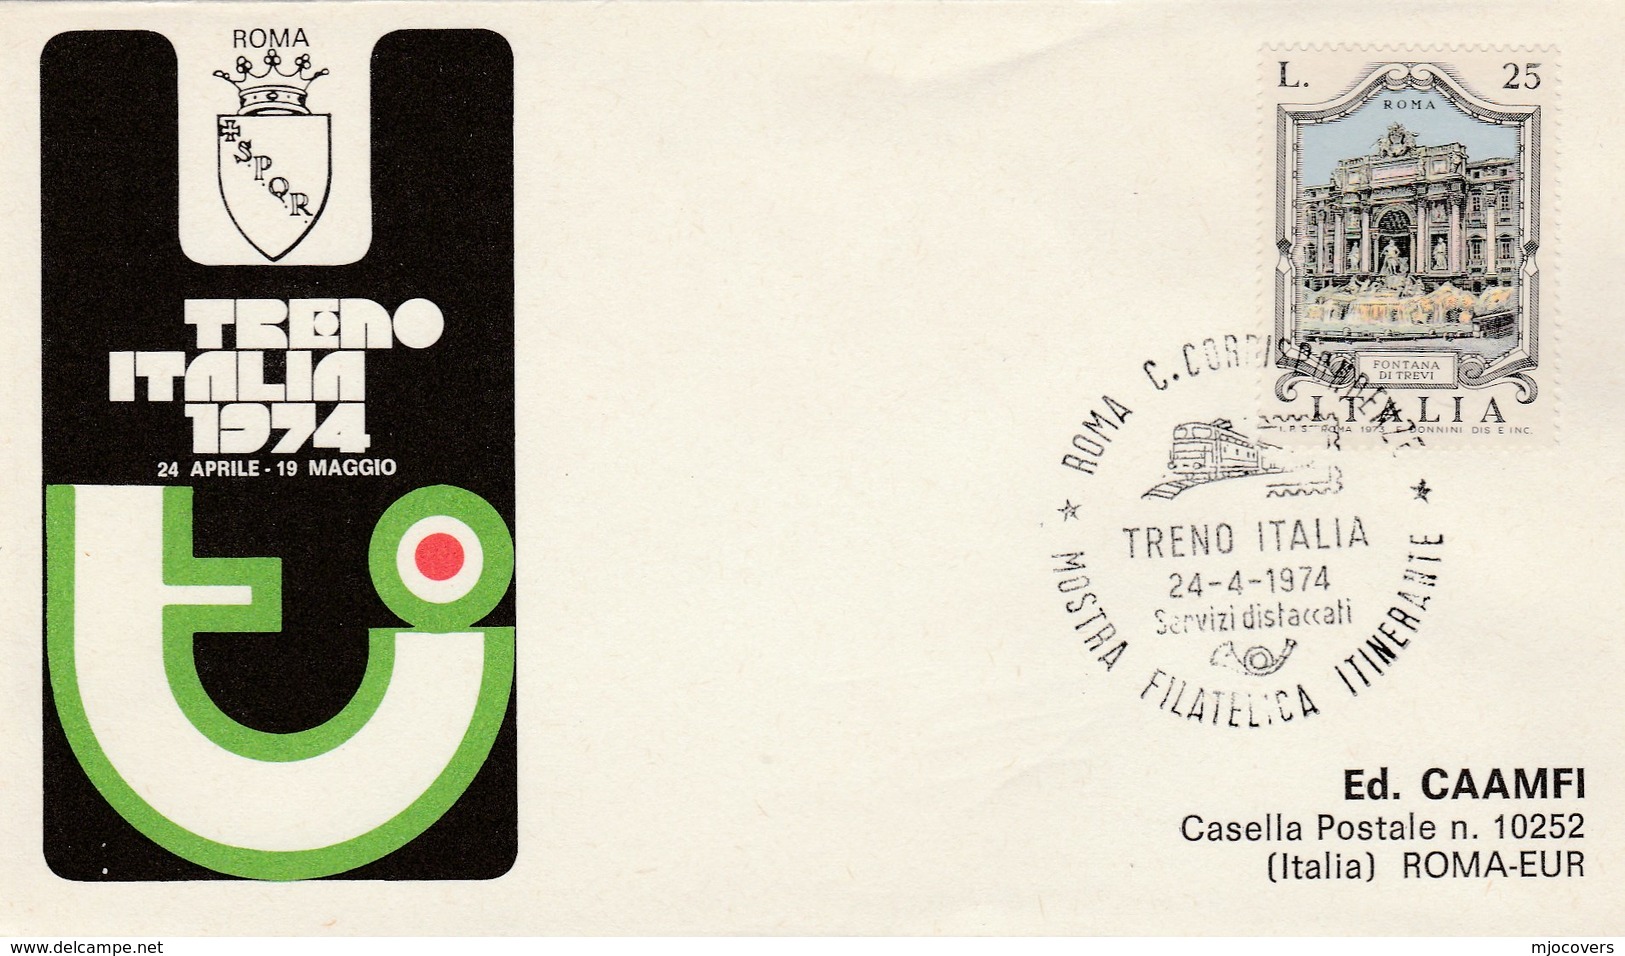 TRAIN - 1974 TRENO ITALIA Railway EVENT COVER Italy Stamps - Trains